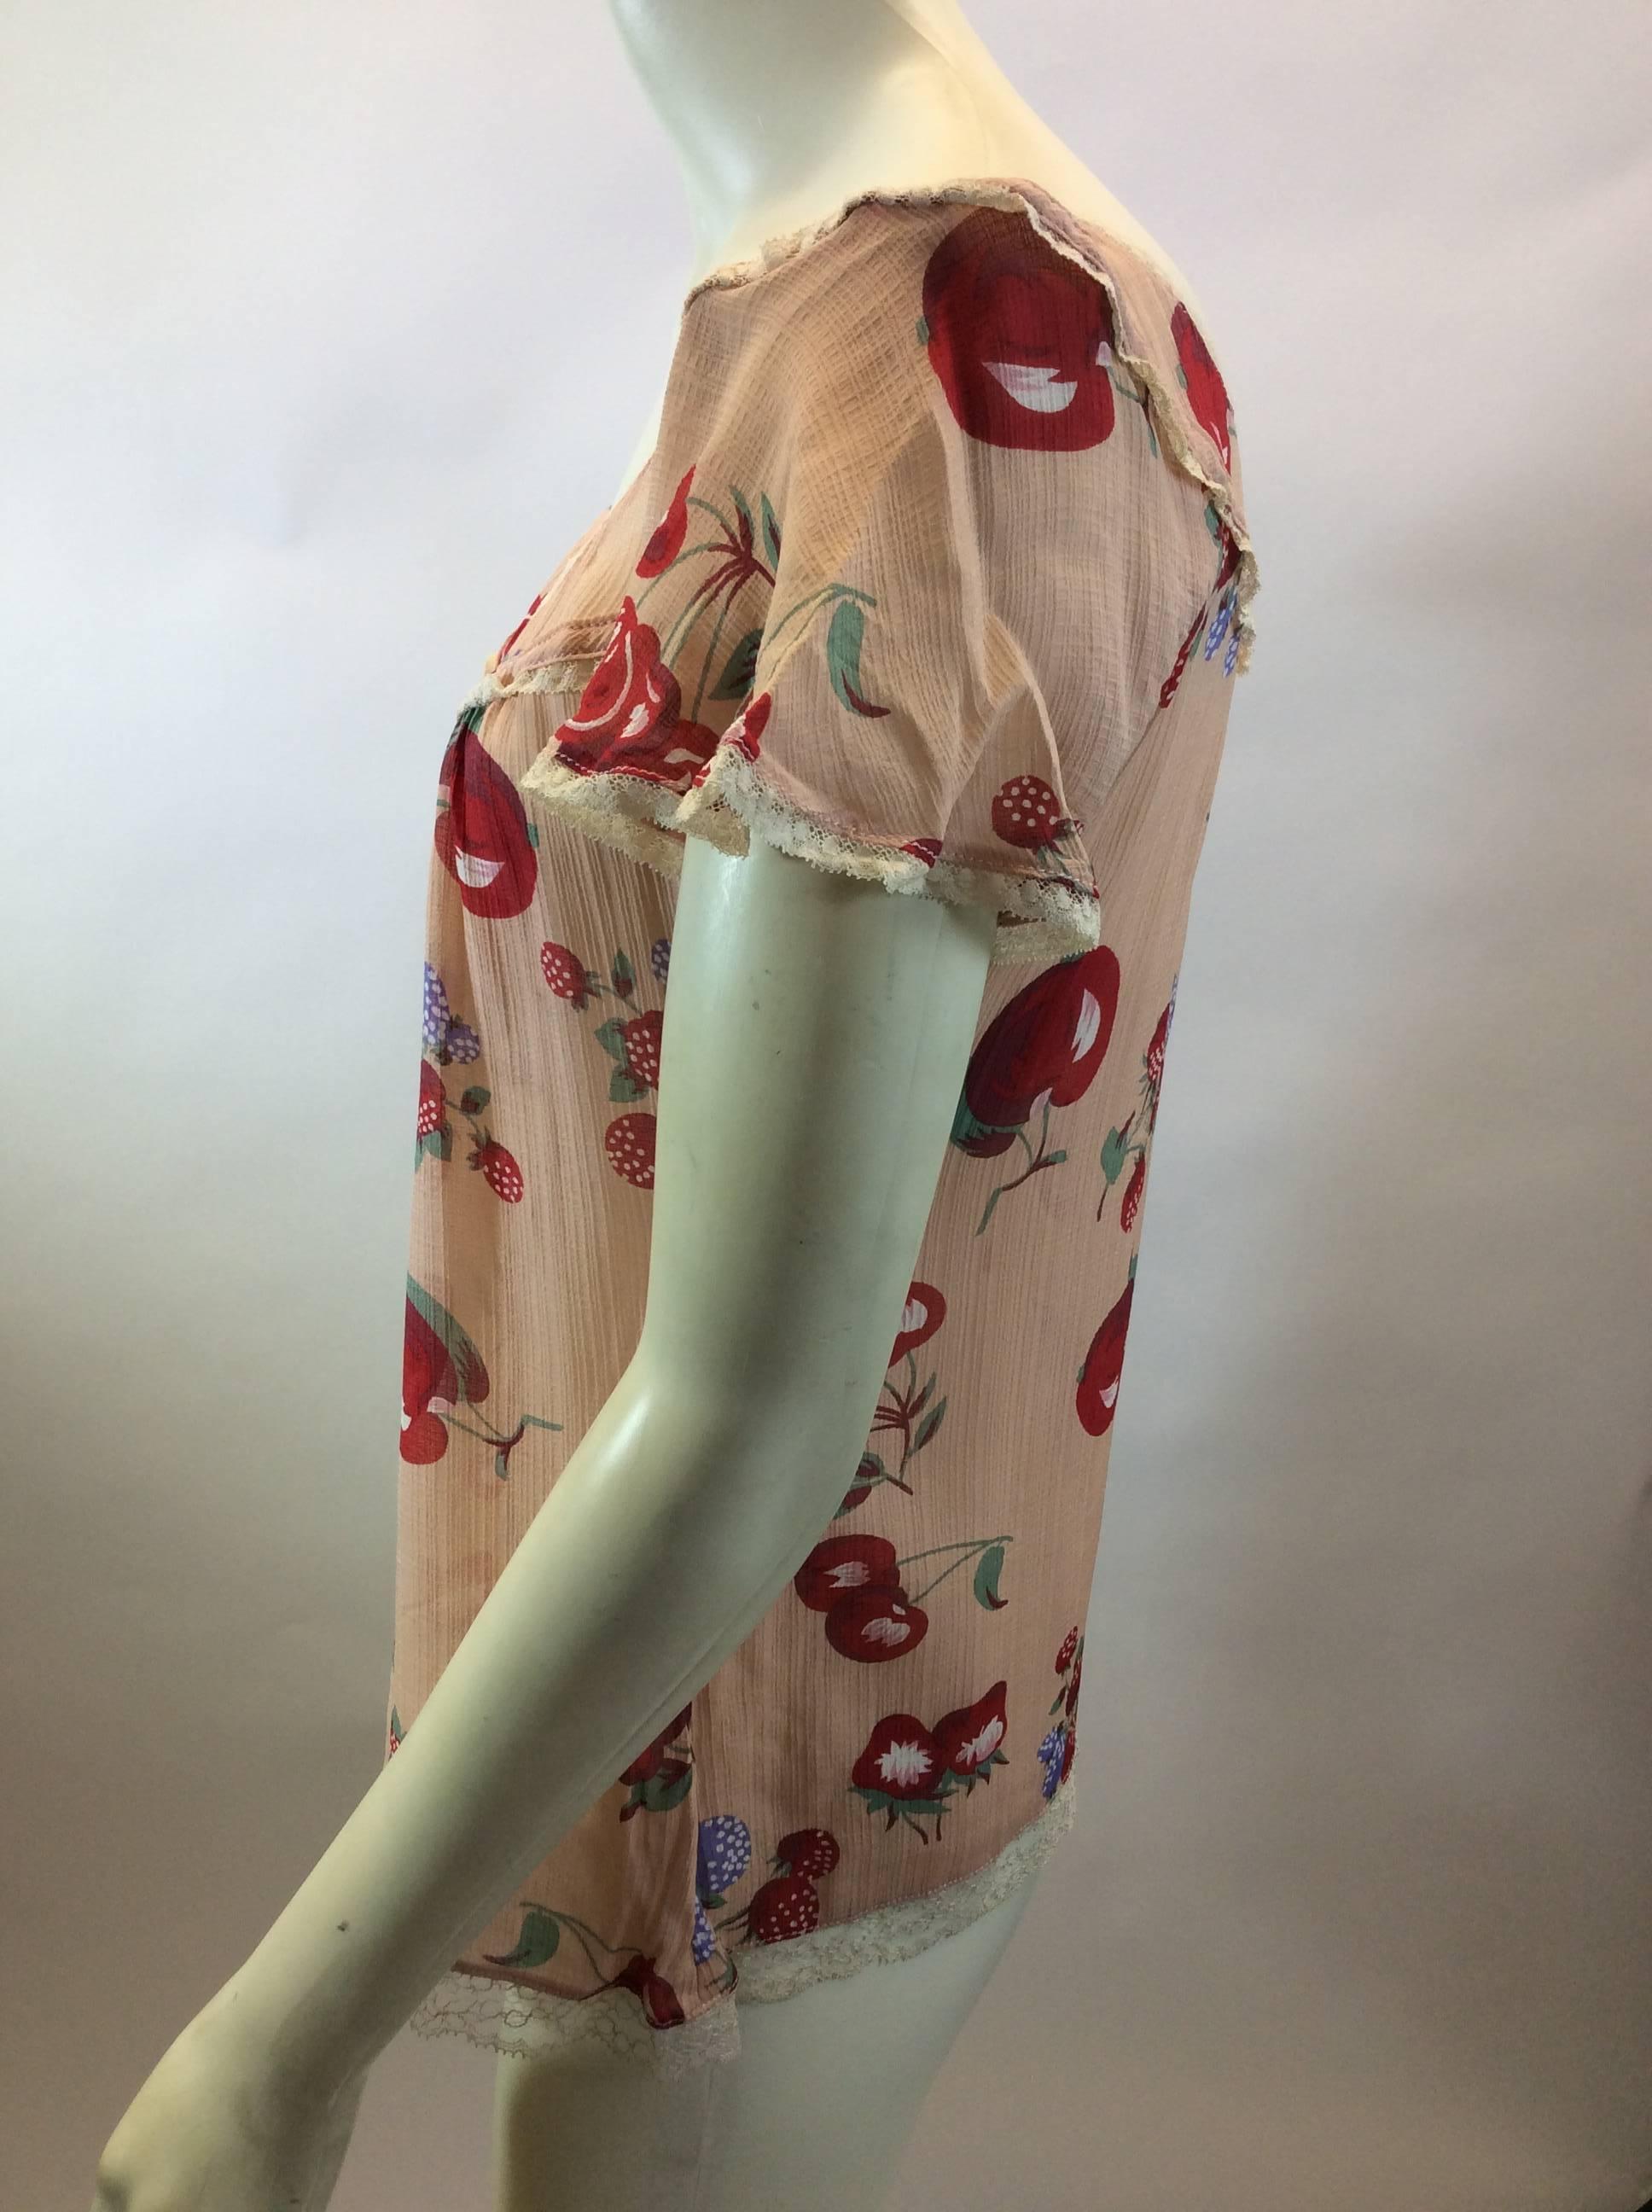 Dolce & Gabbana Cherry Print Silk Blouse
$85
100% Silk
Made in Italy
Size 40
Length 23